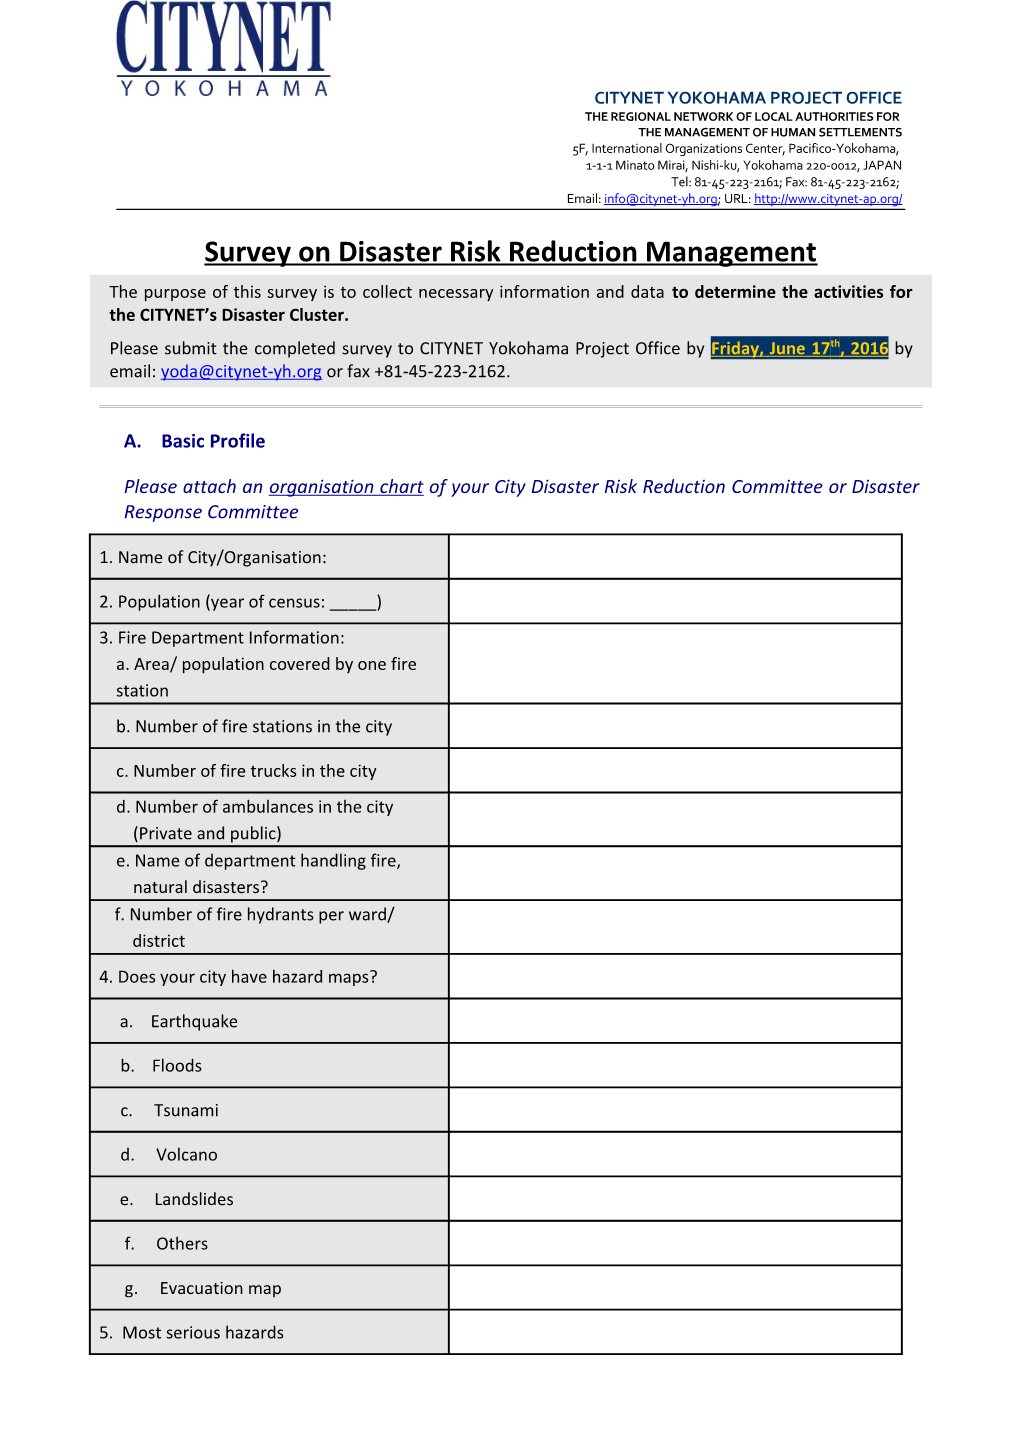 Survey on Disaster Risk Reduction Management